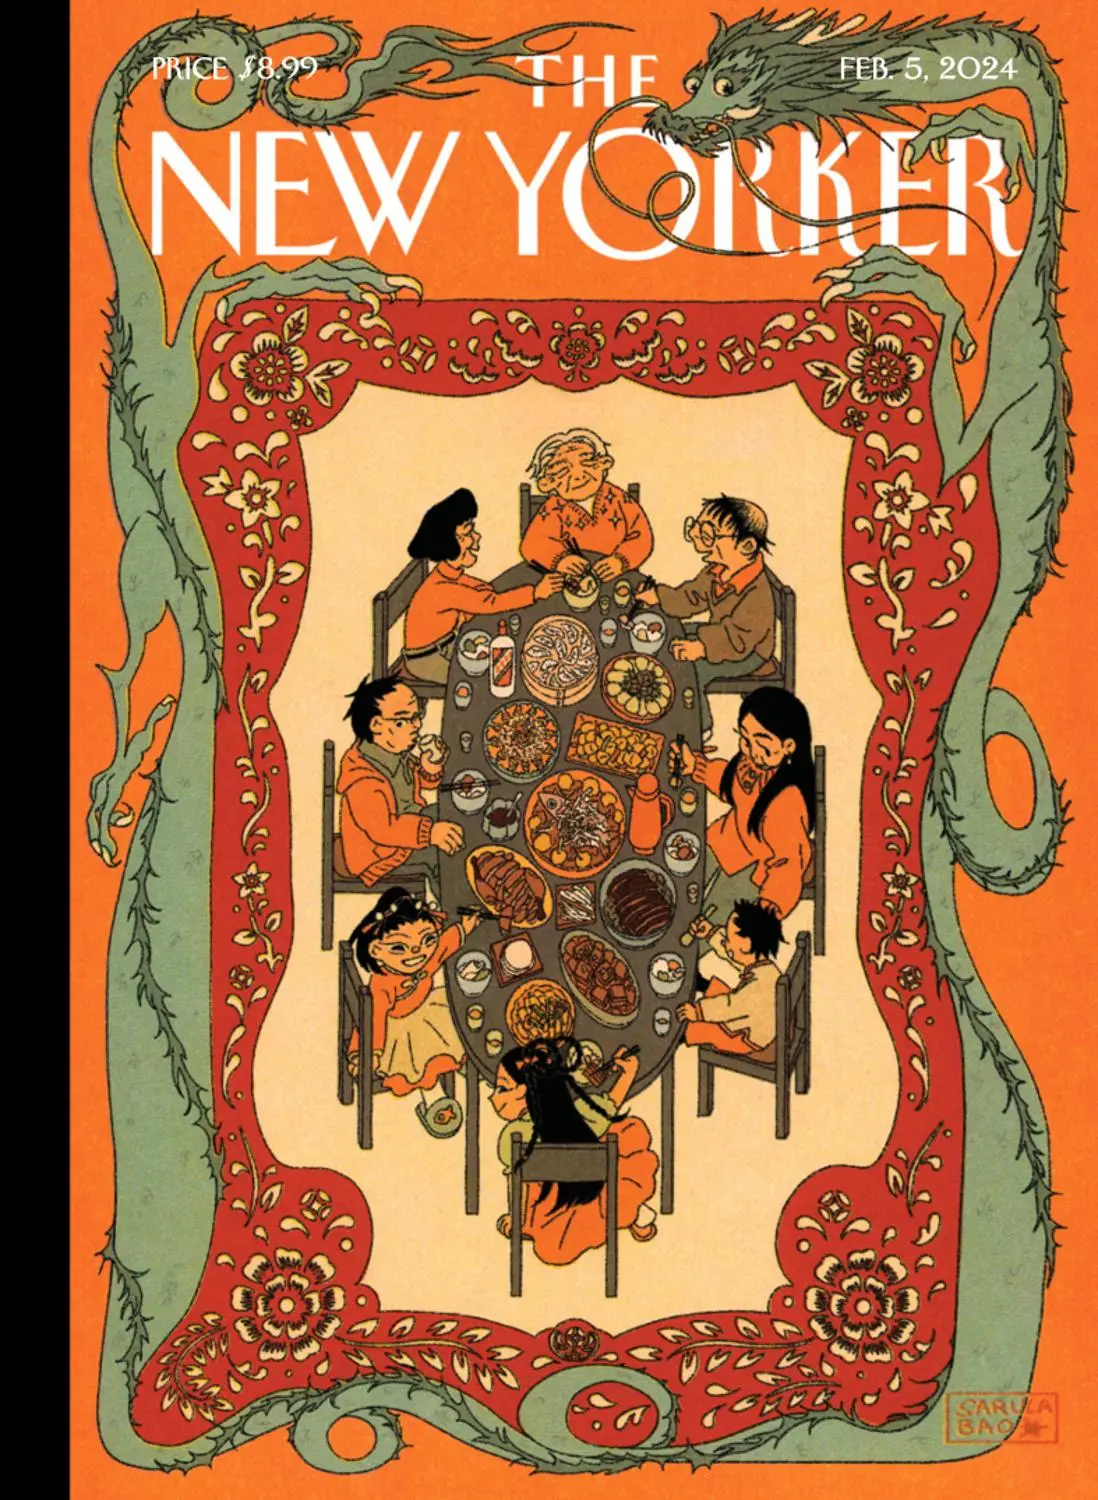 The New Yorker February 5, 2024 / AvaxHome